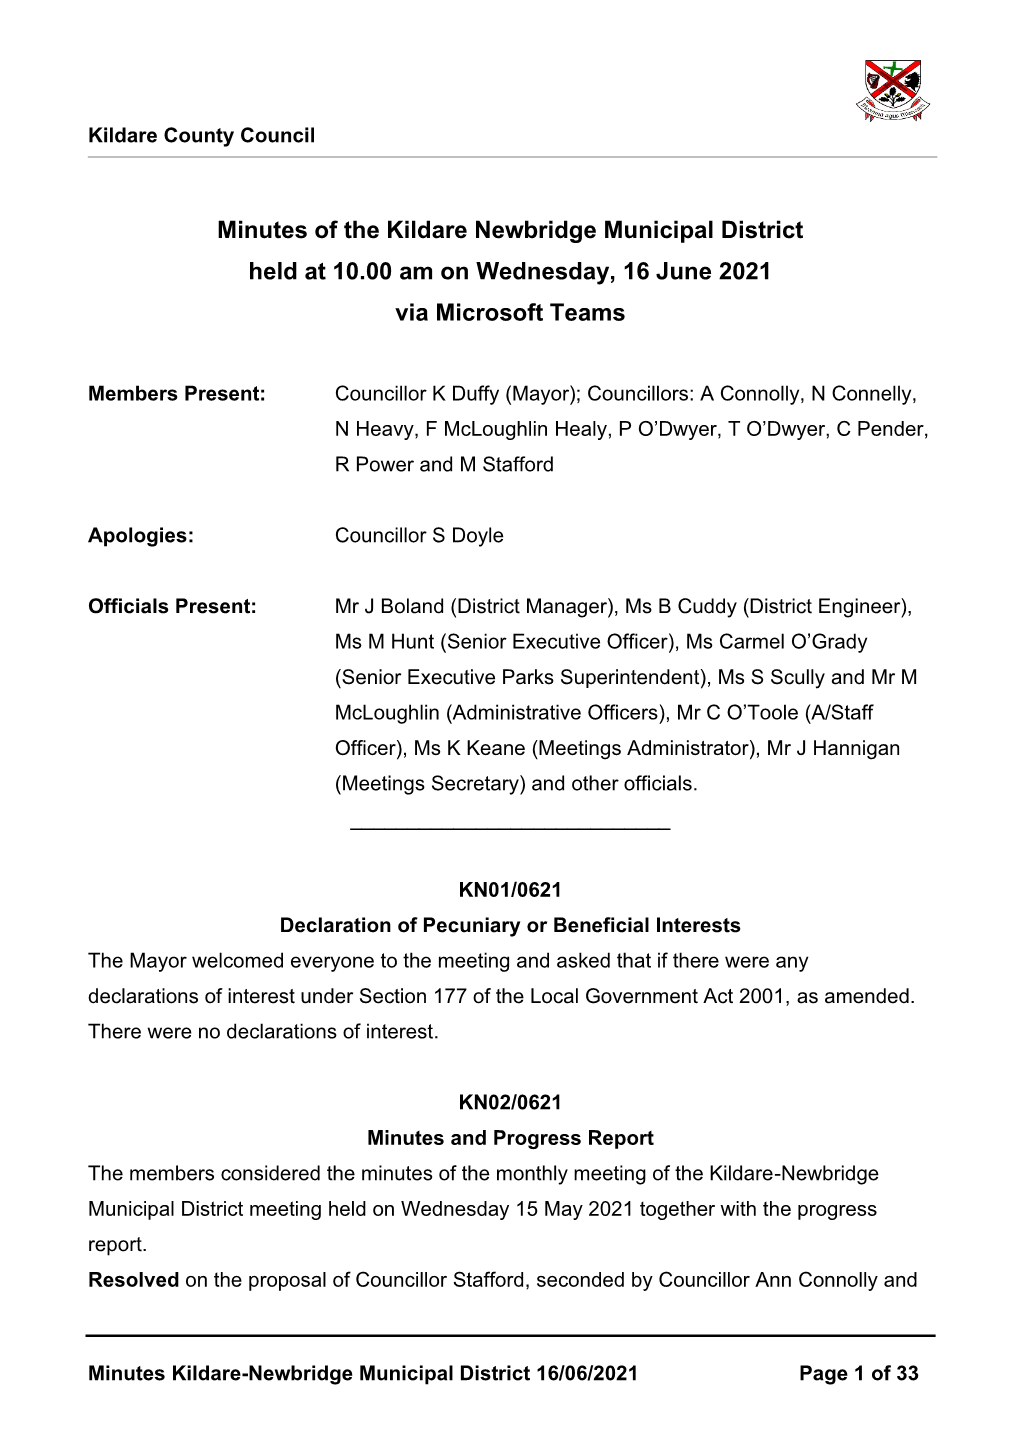 Minutes of the Kildare Newbridge Municipal District Held at 10.00 Am on Wednesday, 16 June 2021 Via Microsoft Teams